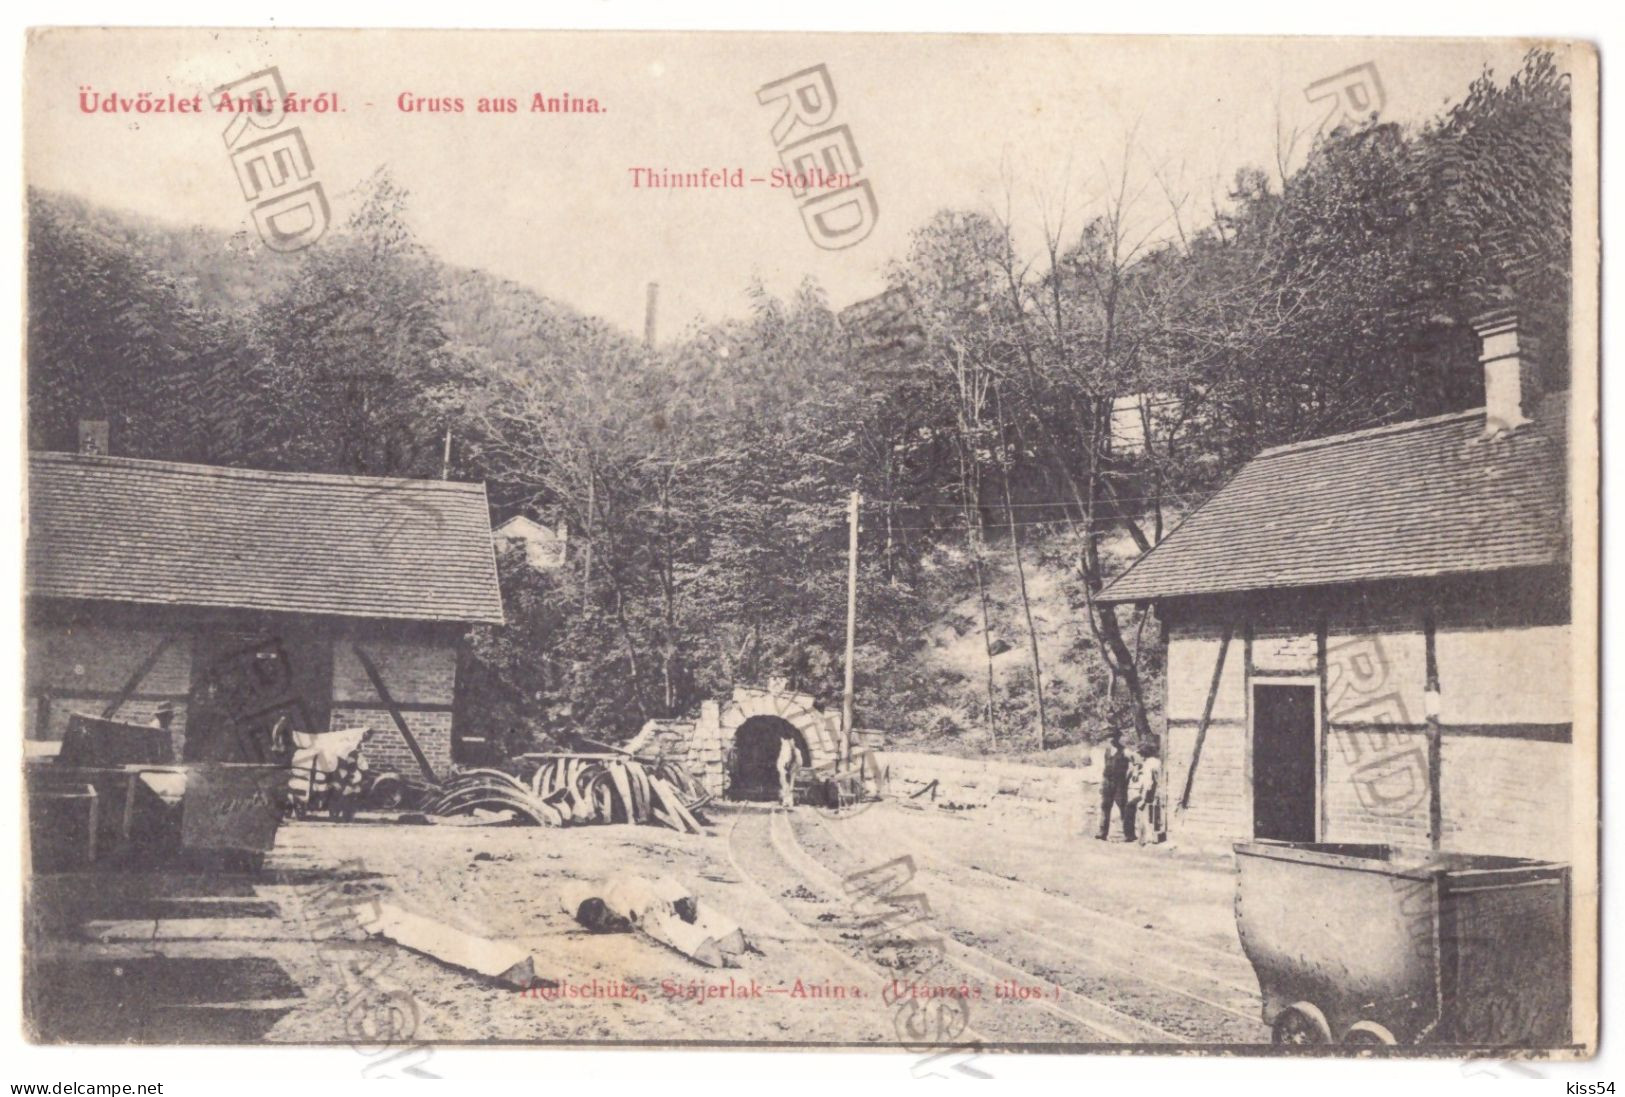 RO - 25433 ANINA, Caras-Severin, Tunnel To Mine, Romania - Old Postcard - Used - 1909 - Romania